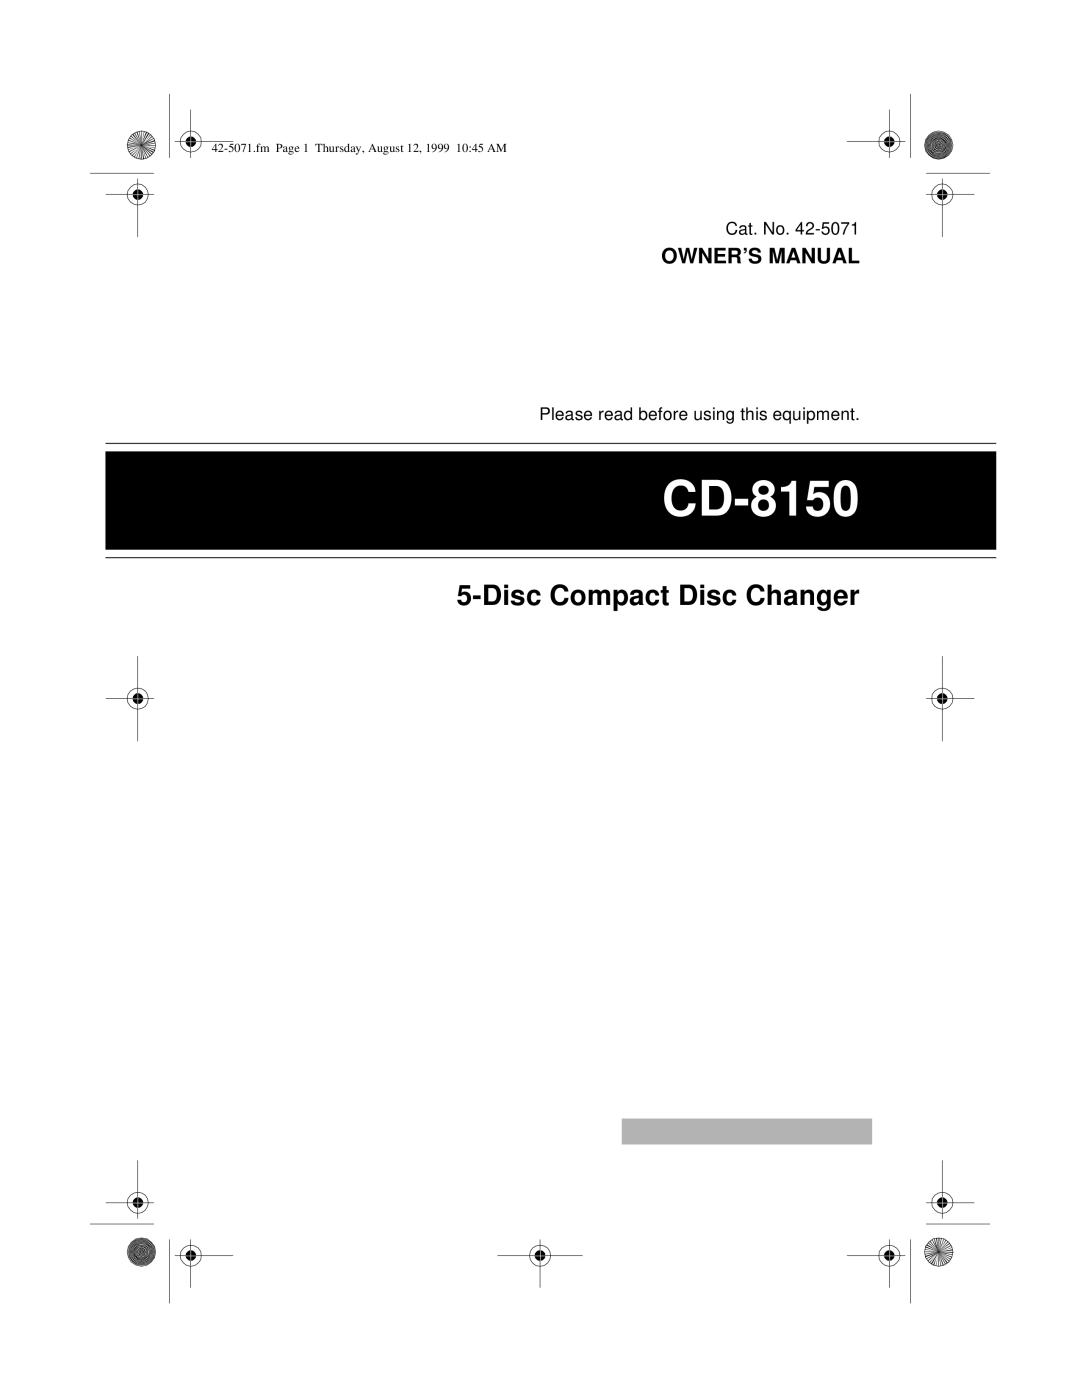 Radio Shack CD-8150 owner manual DiscCompact Disc Changer 